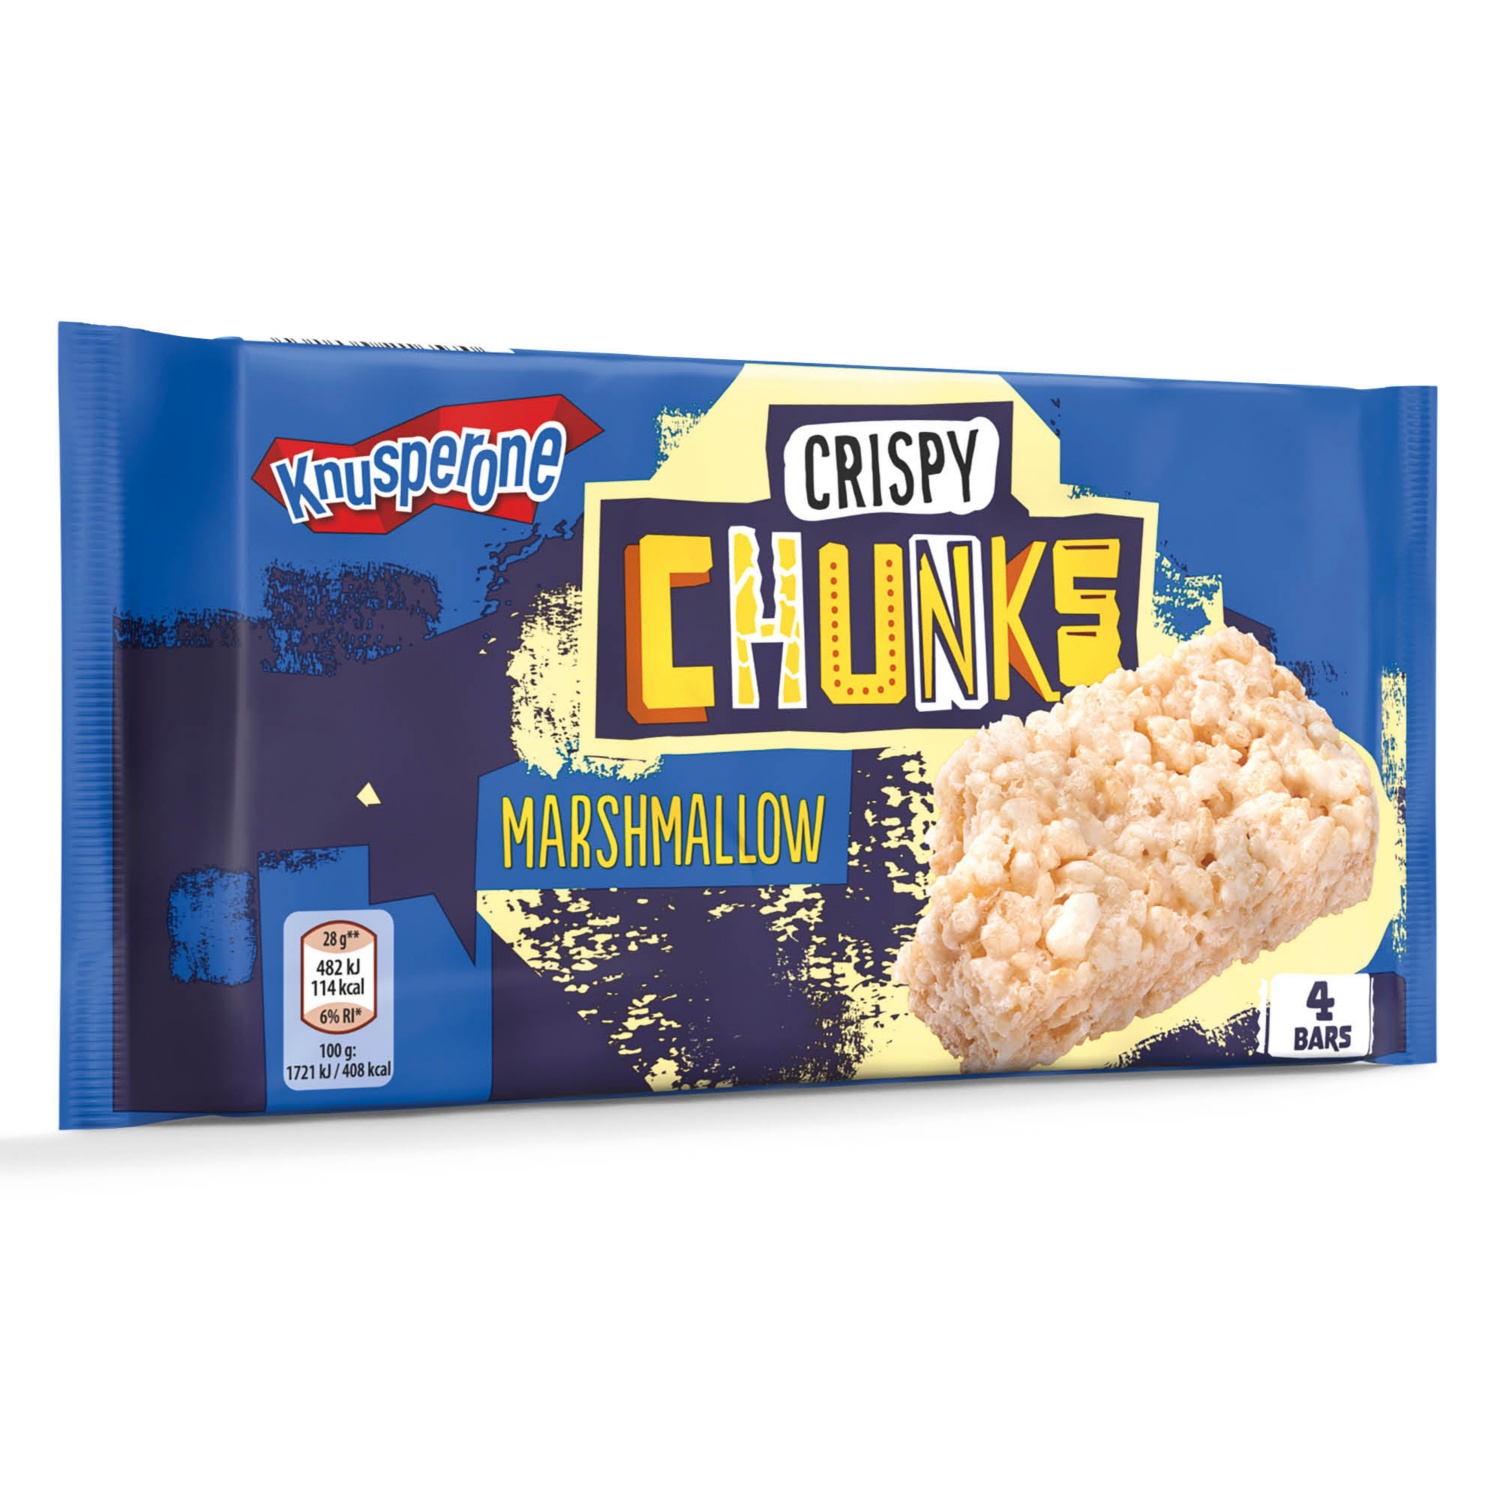 KNUSPERONE Crispy Chunks, Marshmallow